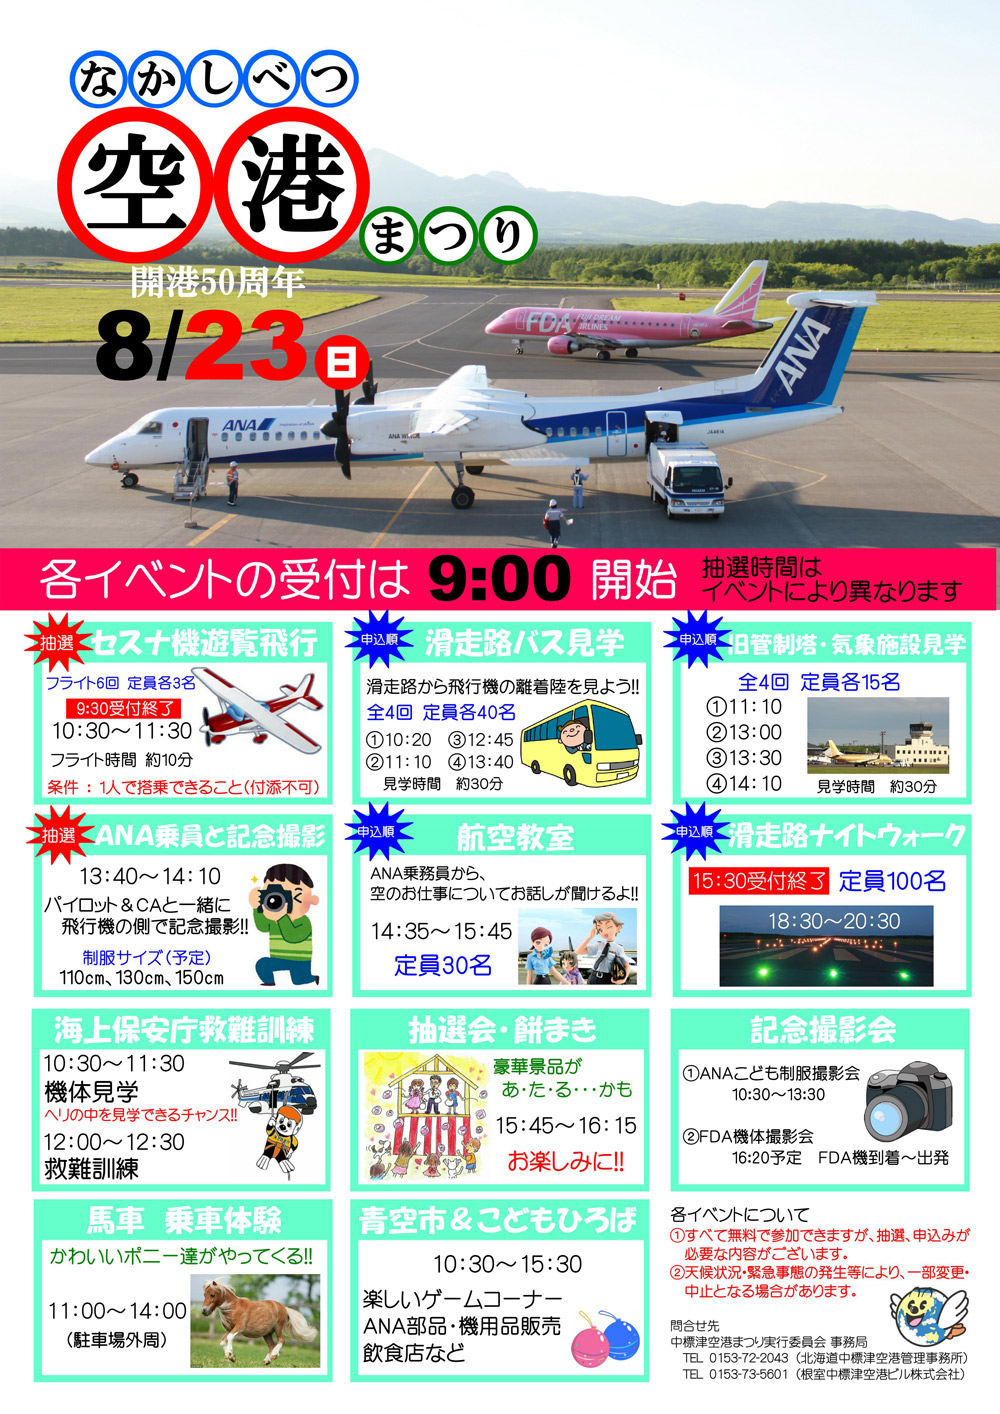 http://www.nakashibetsu-airport.jp/2015%20matsuri.jpg